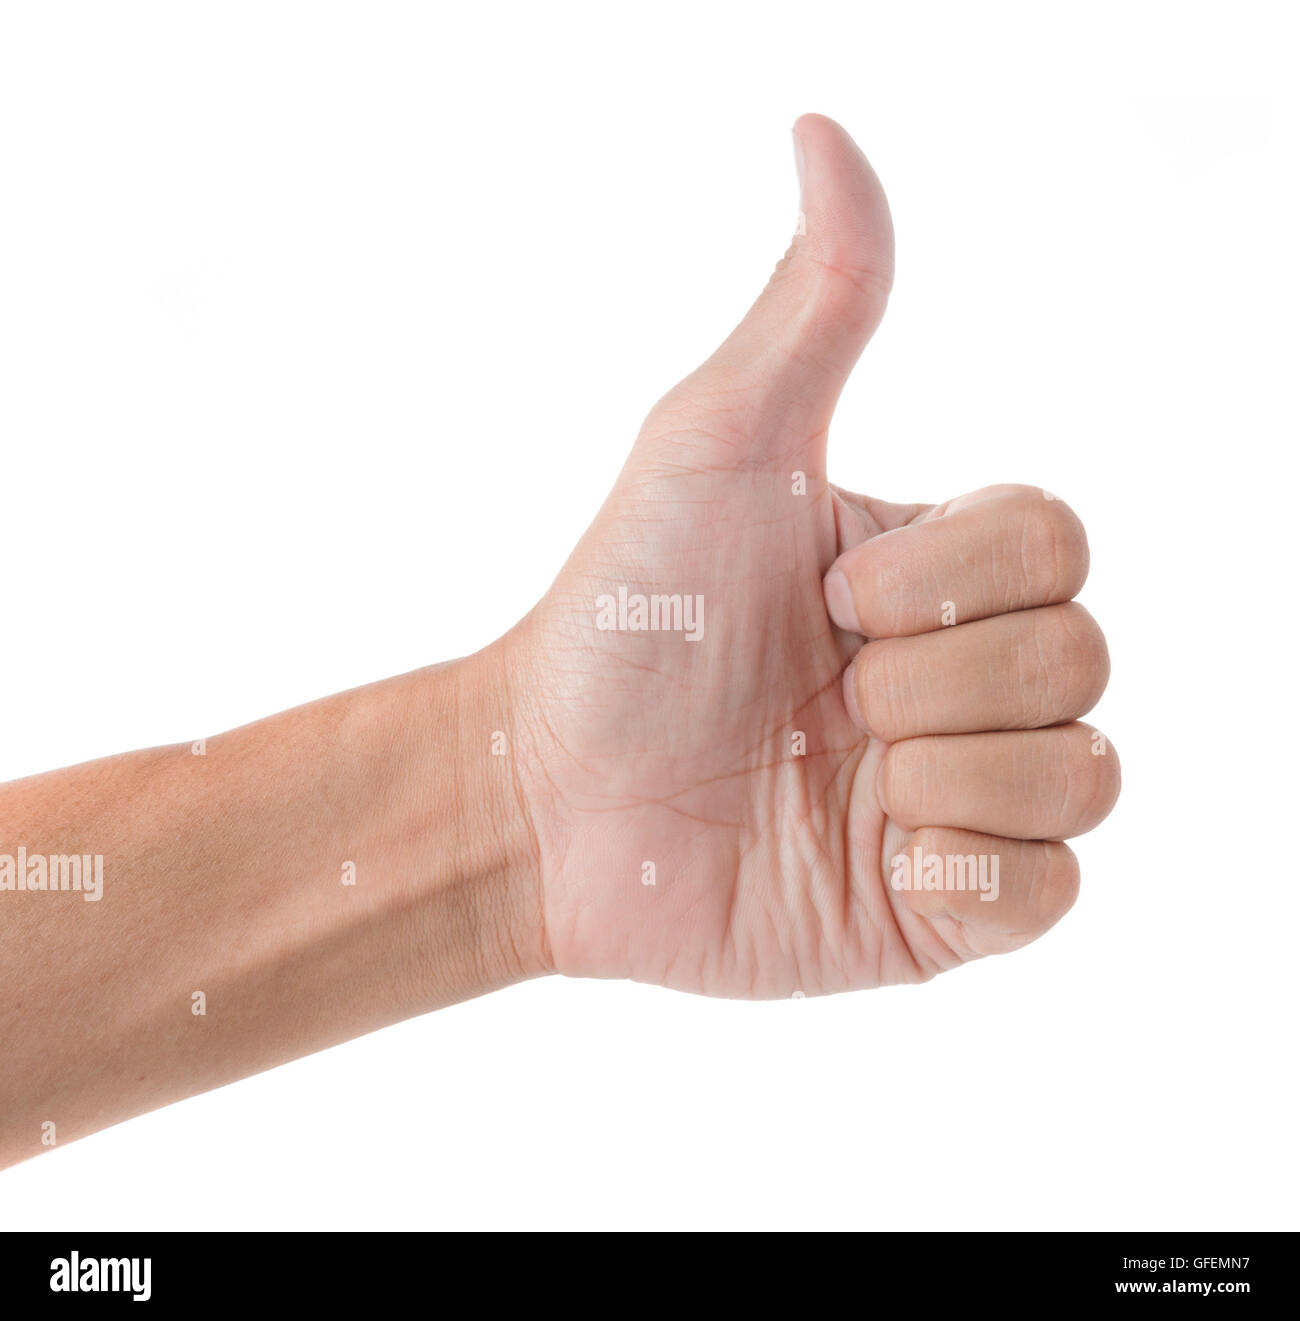 guy hand show thumb up symbol isolated on white background Stock Photo